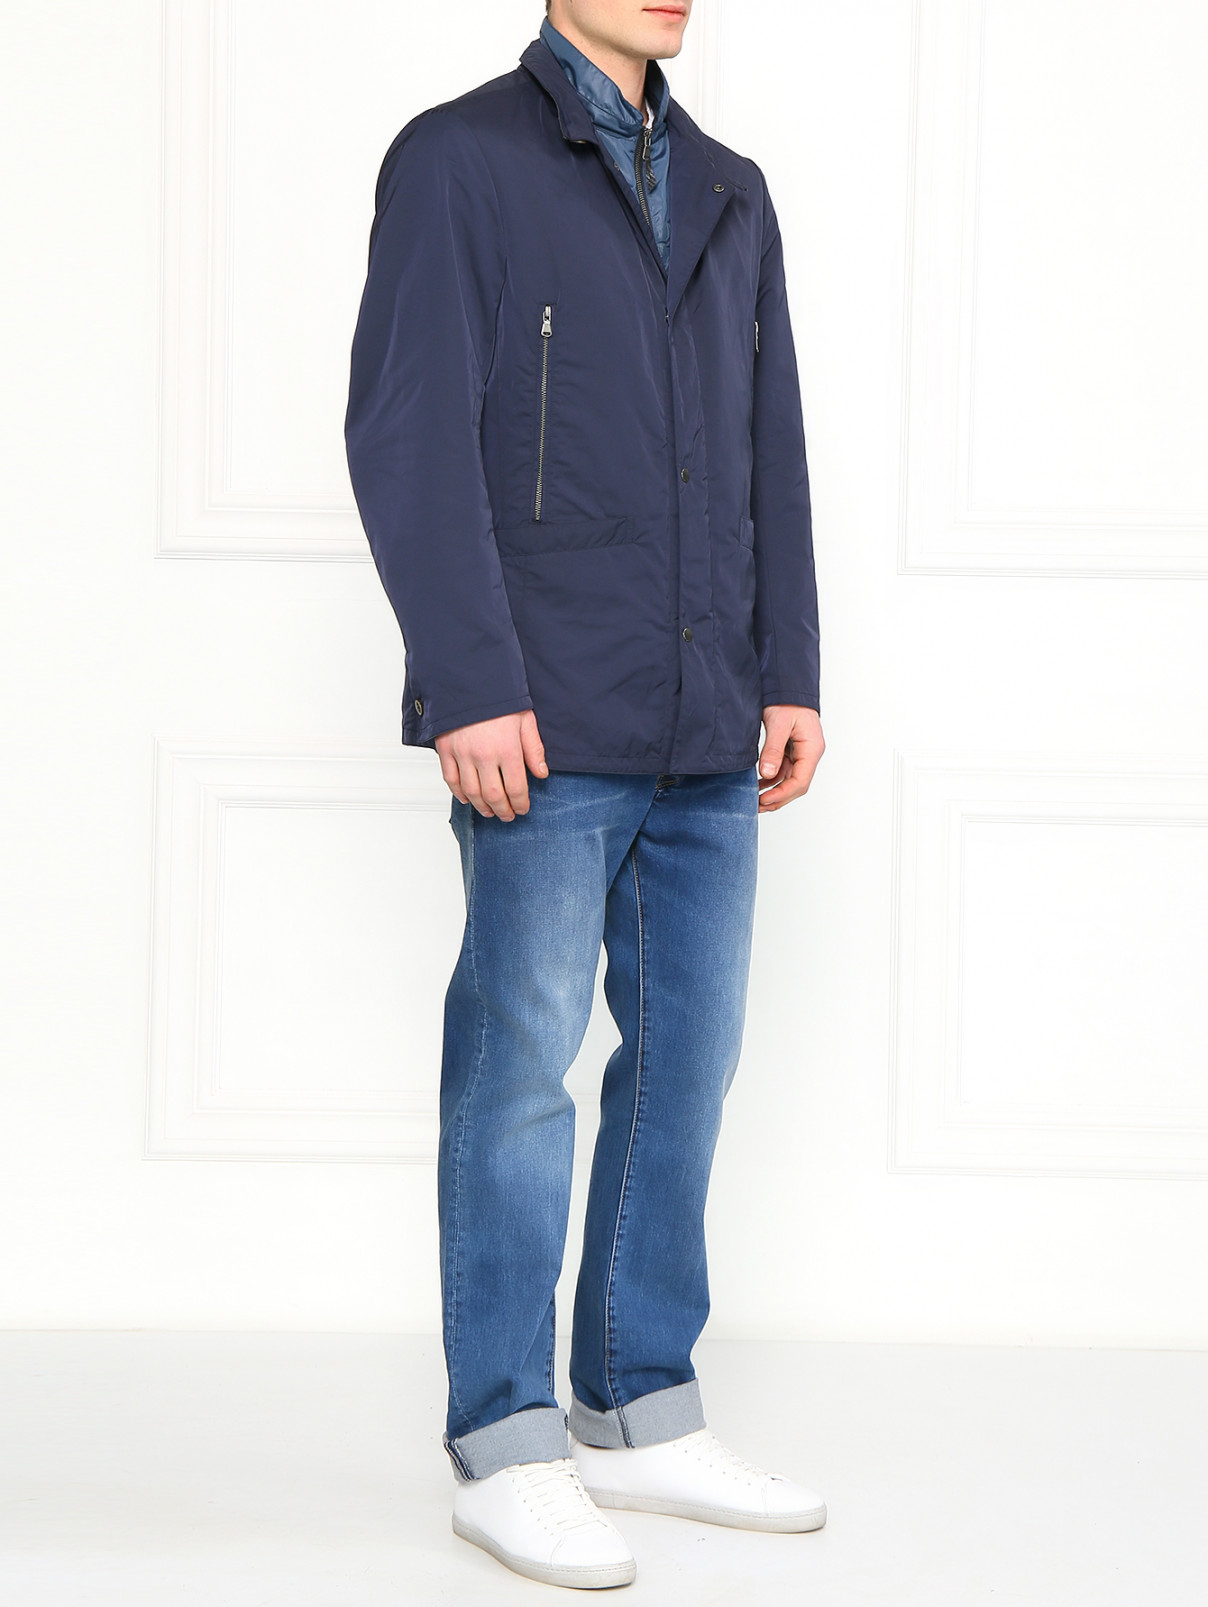 Куртка карманами на молнии Gimo'S  –  Модель Общий вид  – Цвет:  Синий